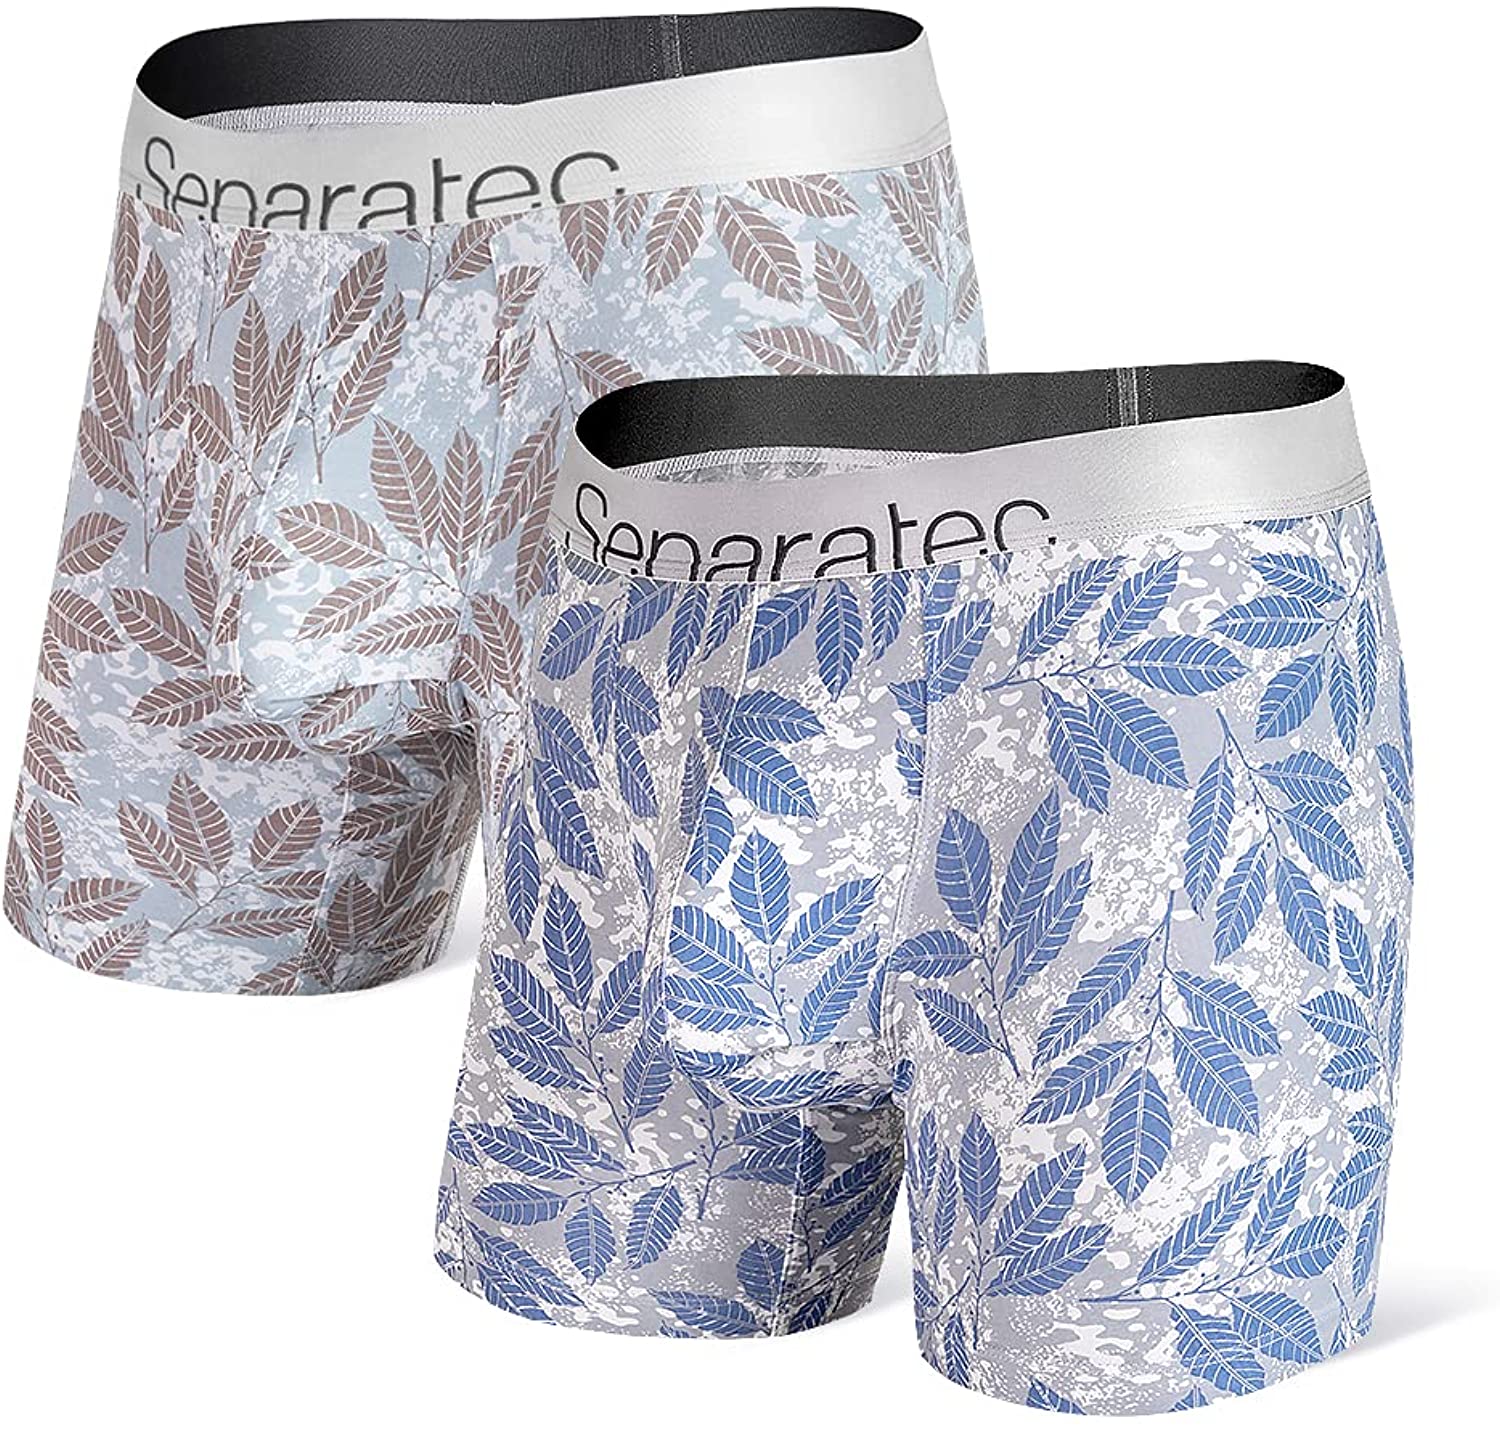 Separatec Men's Dual Pouch Underwear Comfort Canada